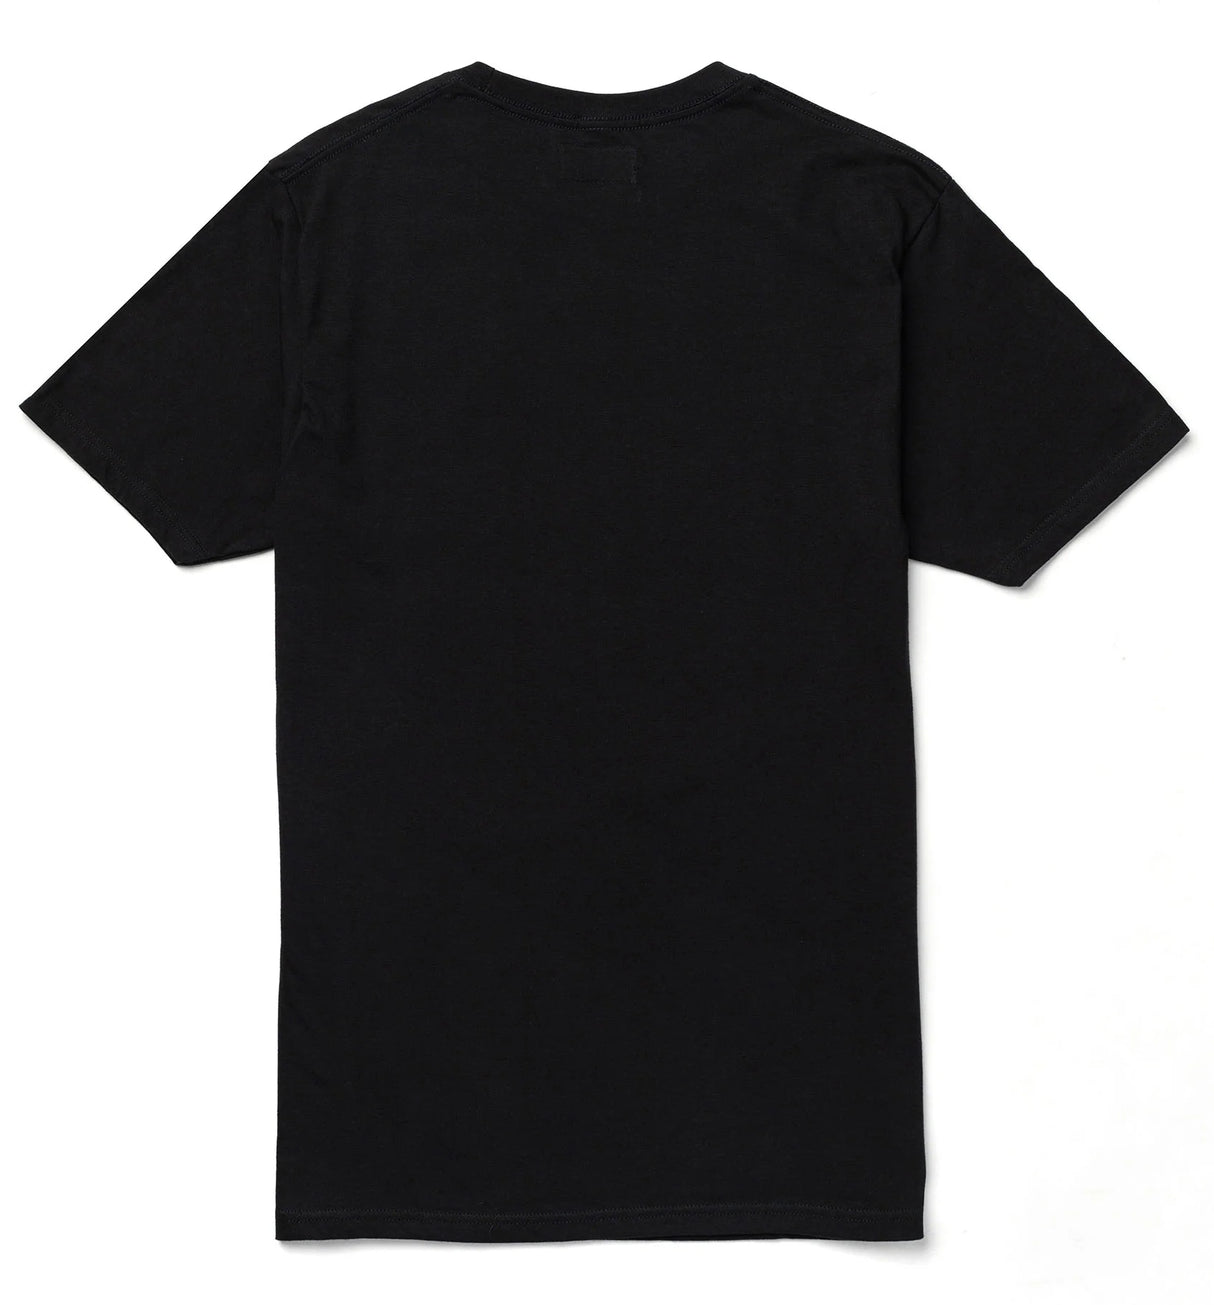 Seager x Waylon Jennings Heritage Black S/s Shirt